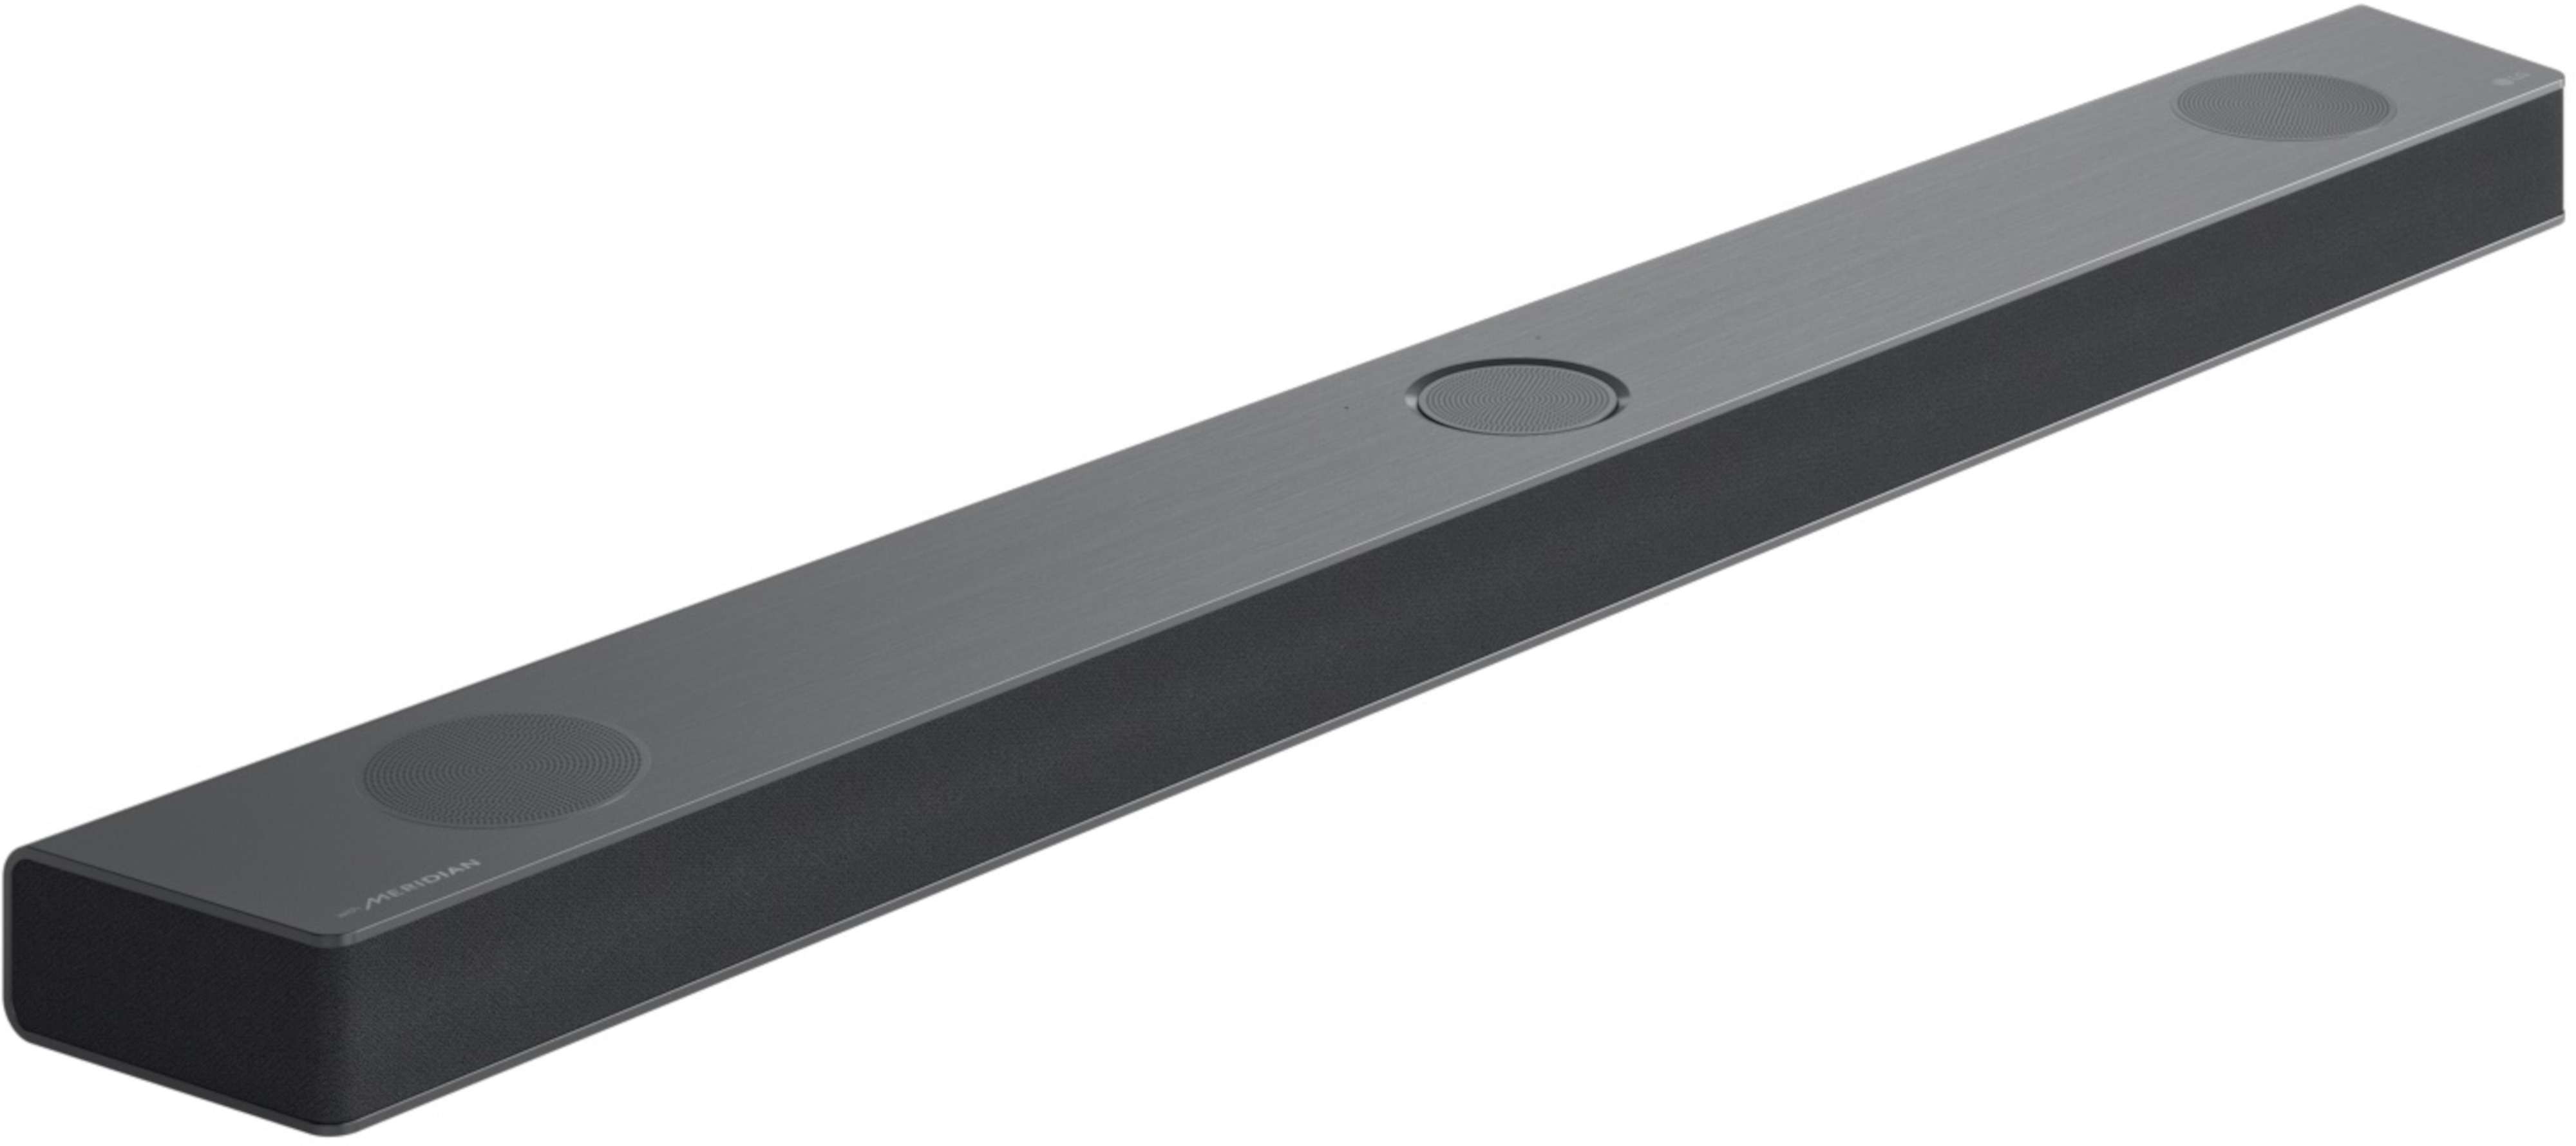 LG DS95QR, Soundbar, Dark Silver Steel